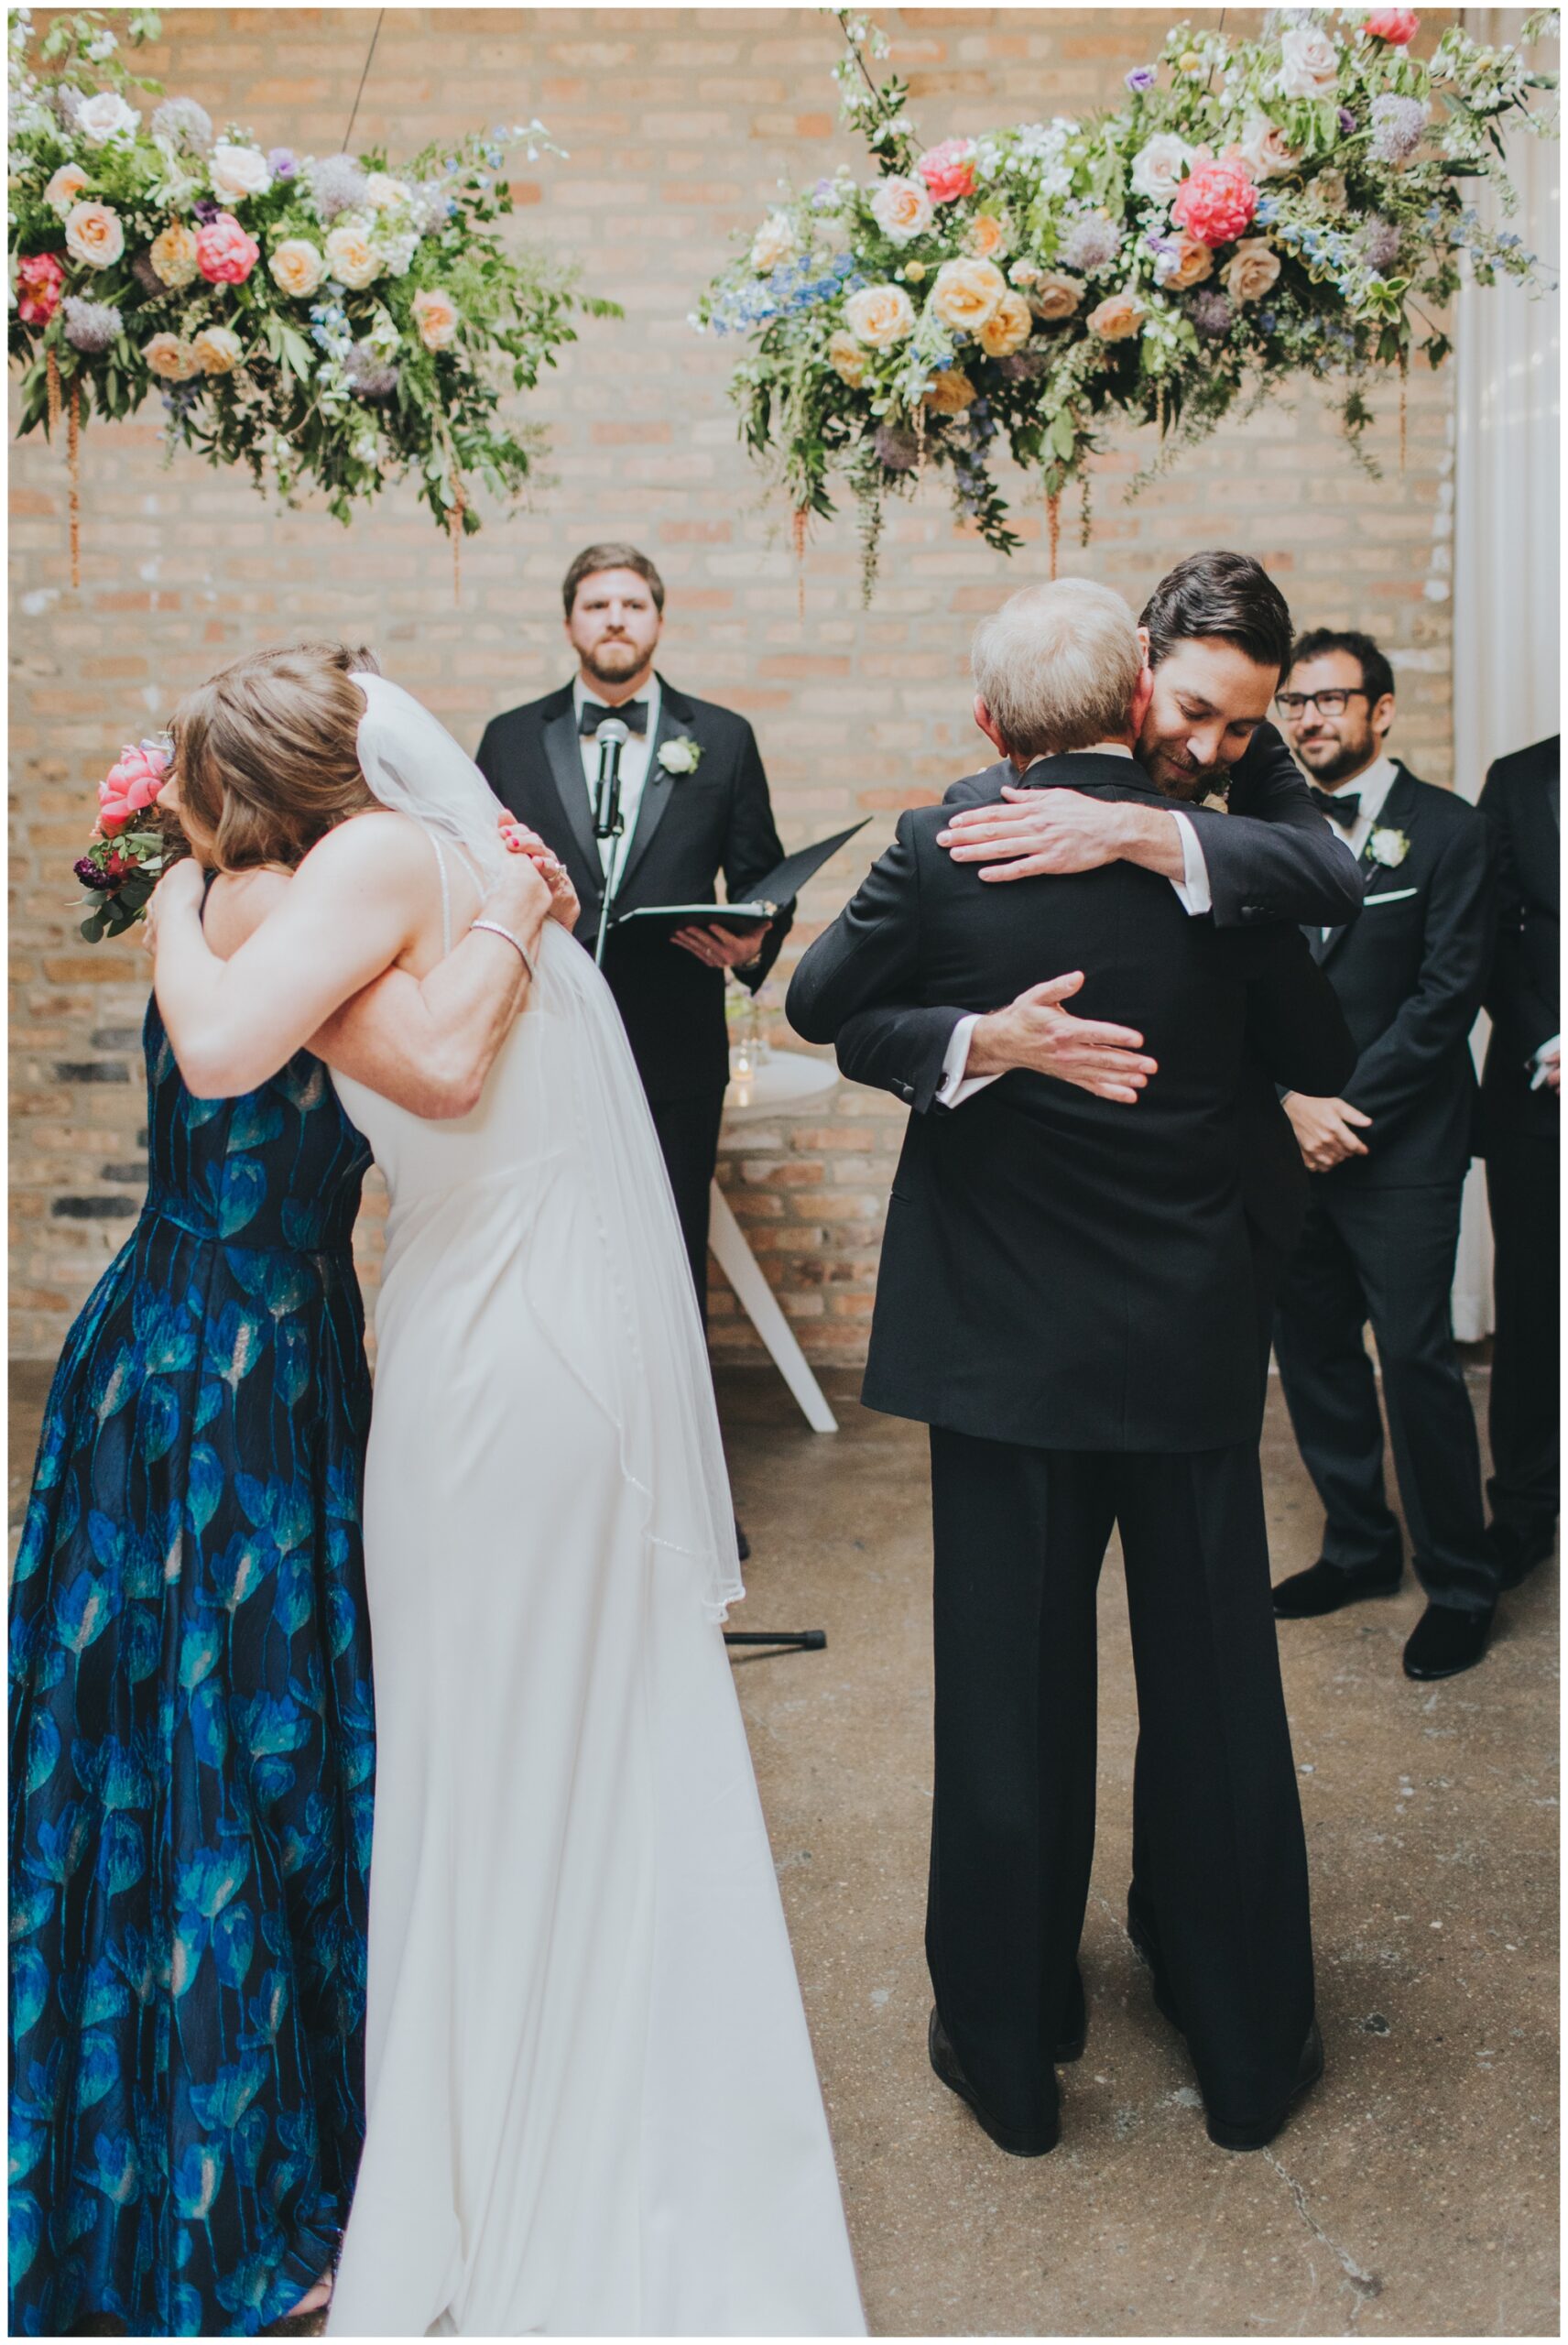 The Arbory Chicago wedding photographed by Meg Adamik Creative